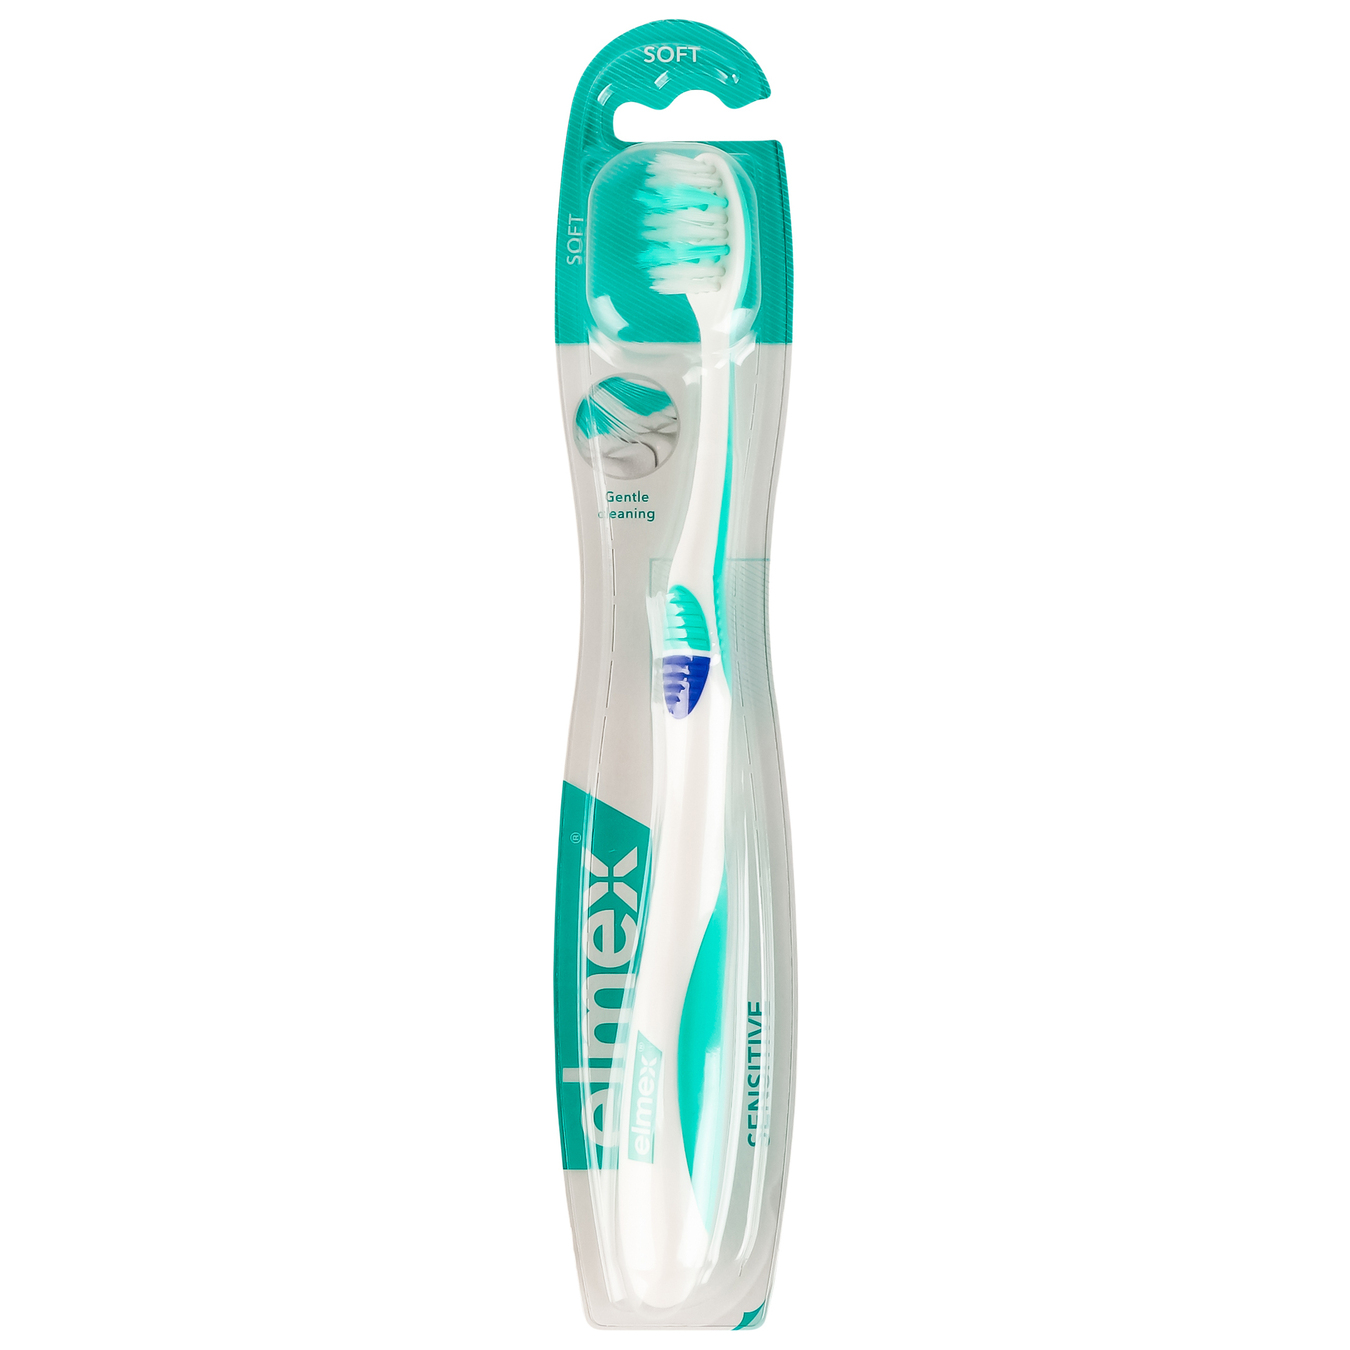 Toothbrush Elmex sensitive soft